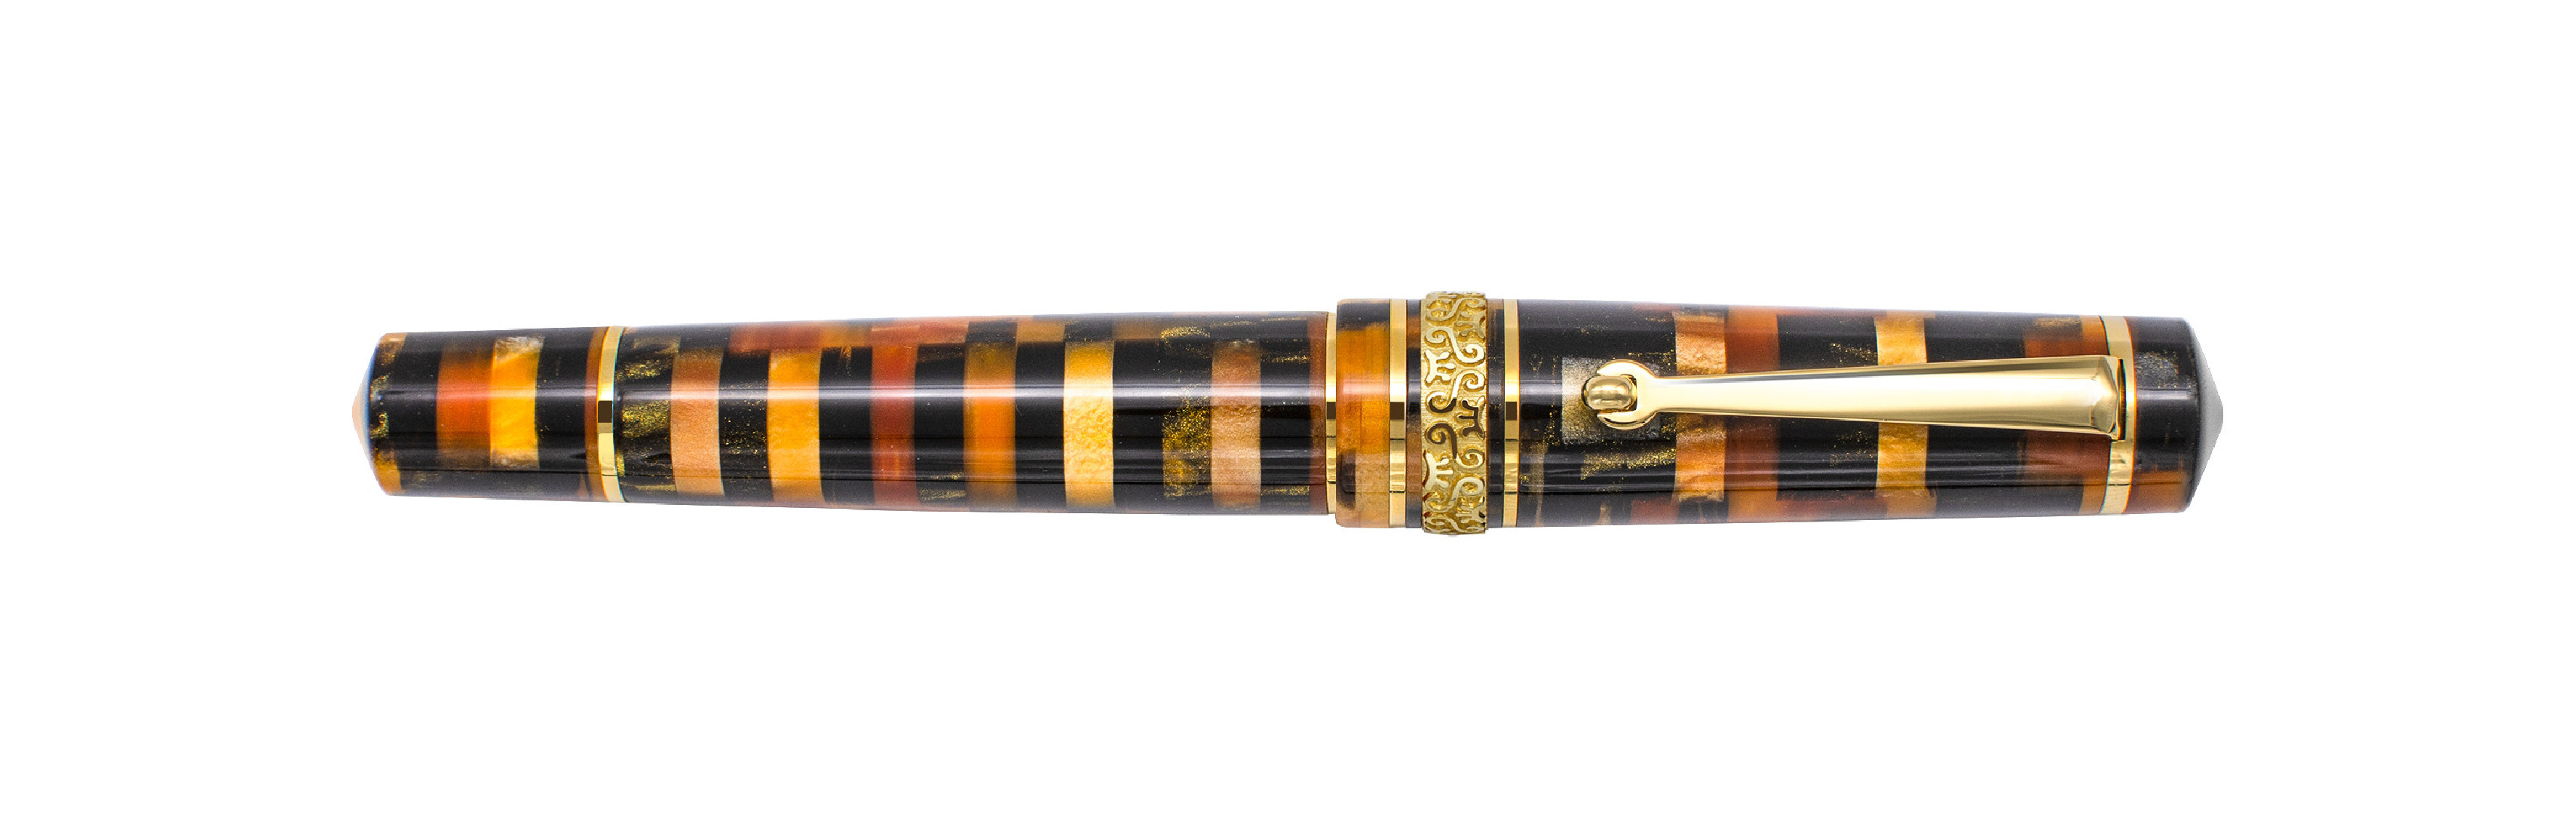 Maiora Alpha Oroarancio limited edition fountain pen